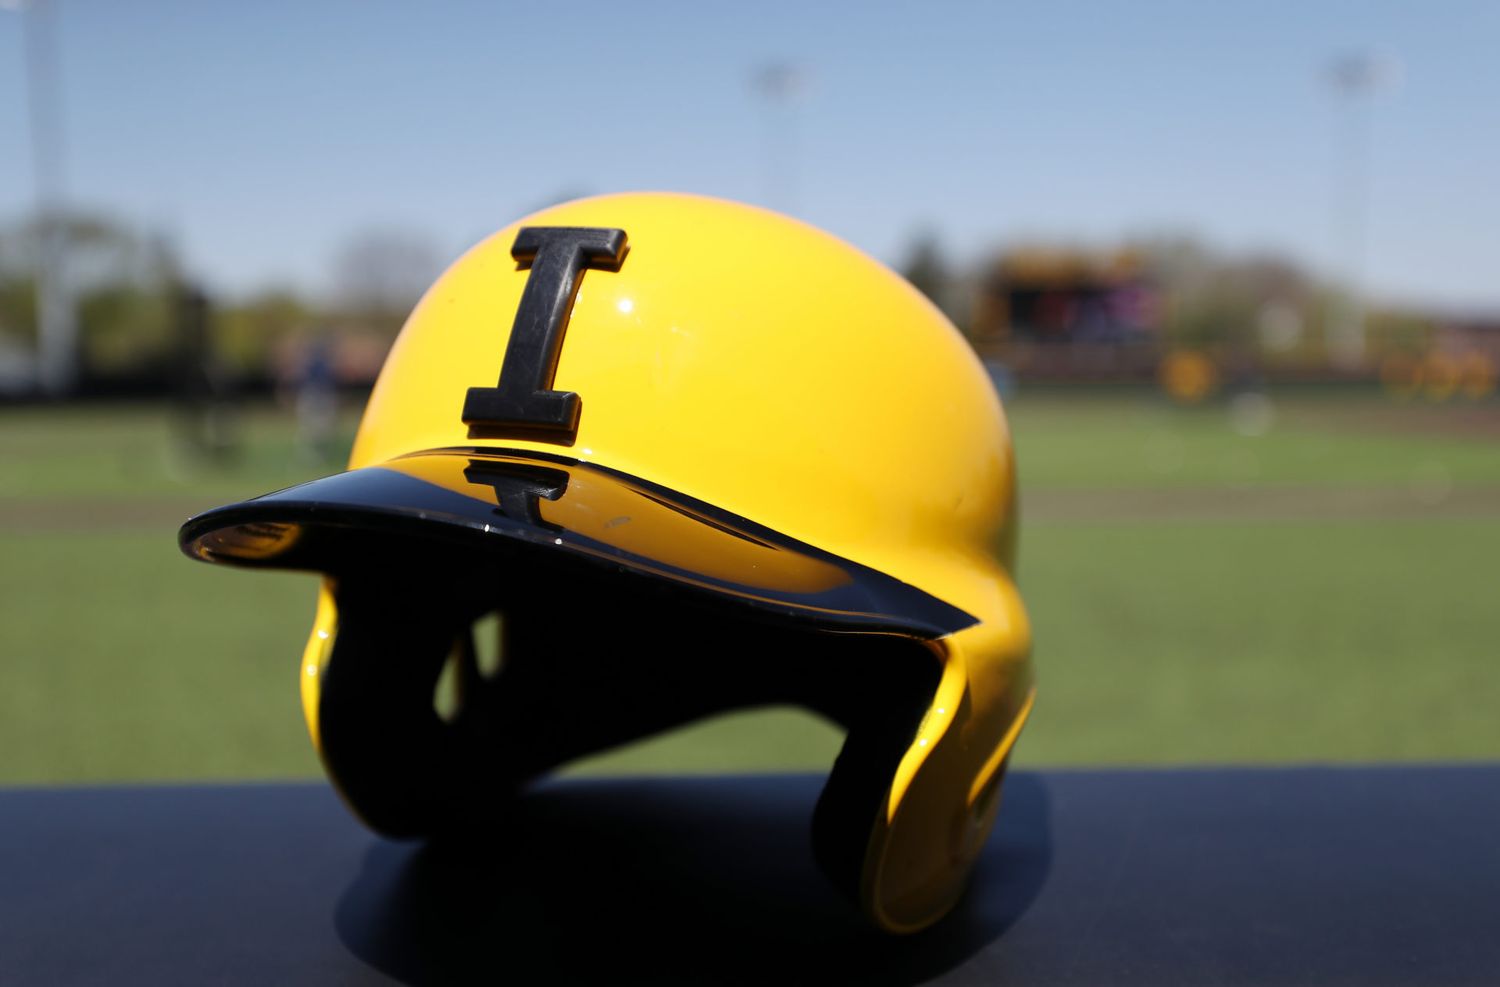 Baseball Uniforms – University of Iowa Athletics